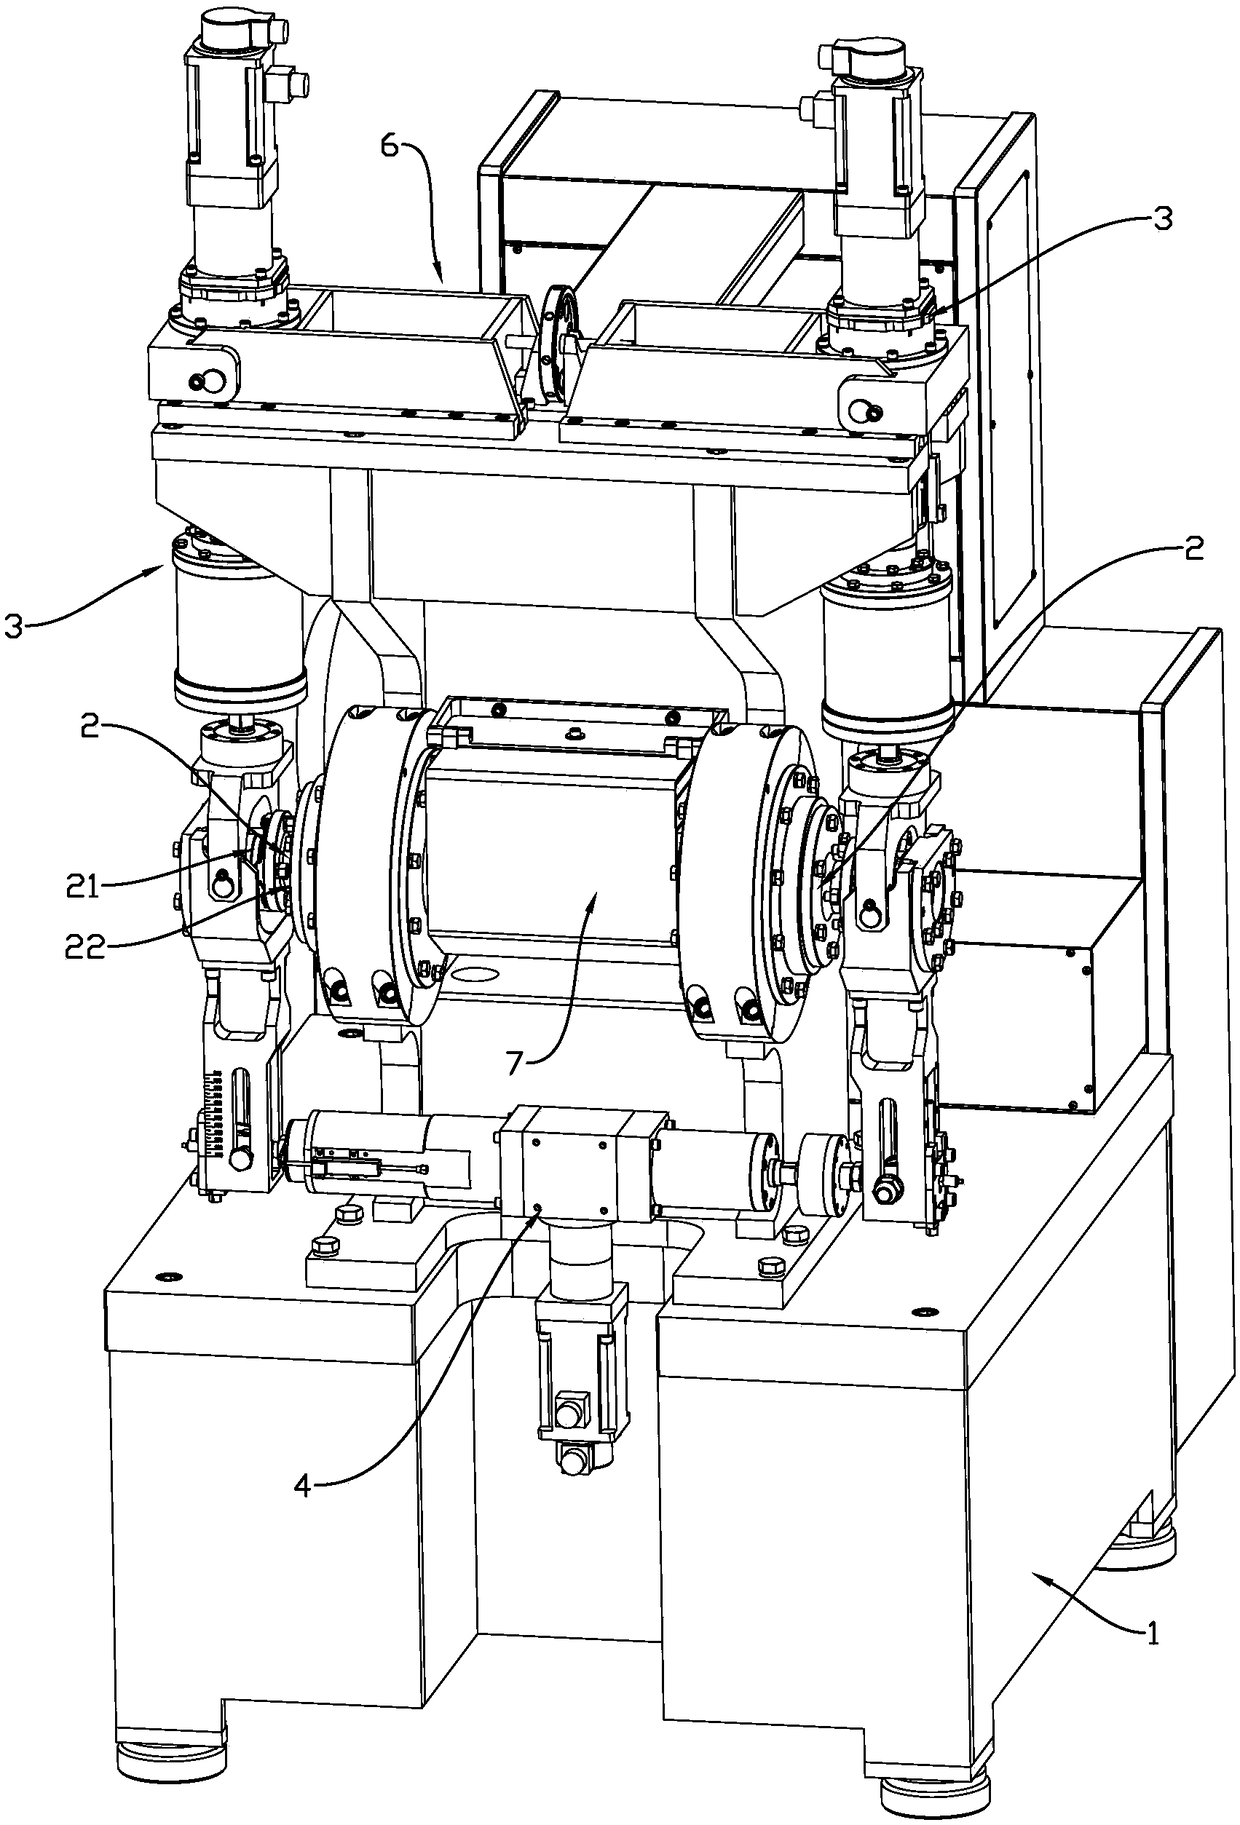 Automobile hub bearing testing machine